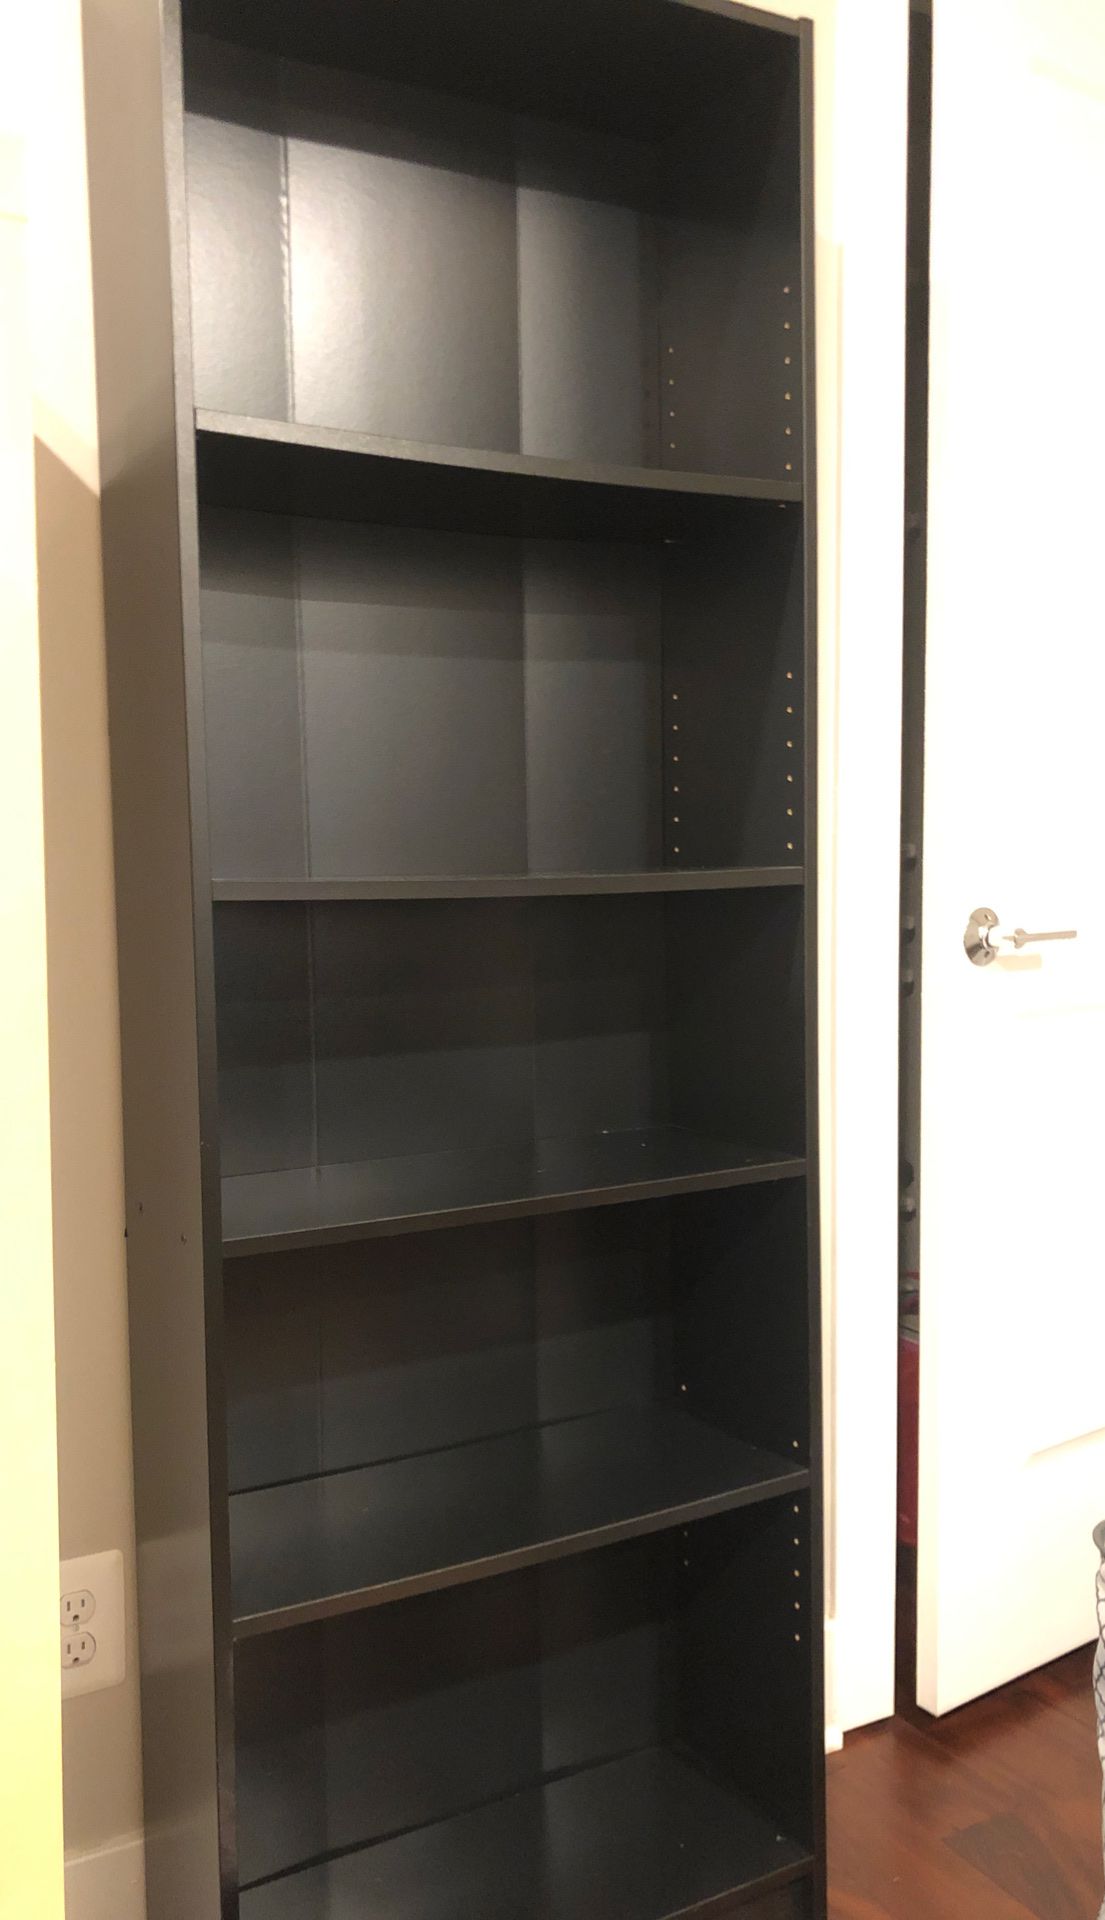 IKEA dark wood bookshelf